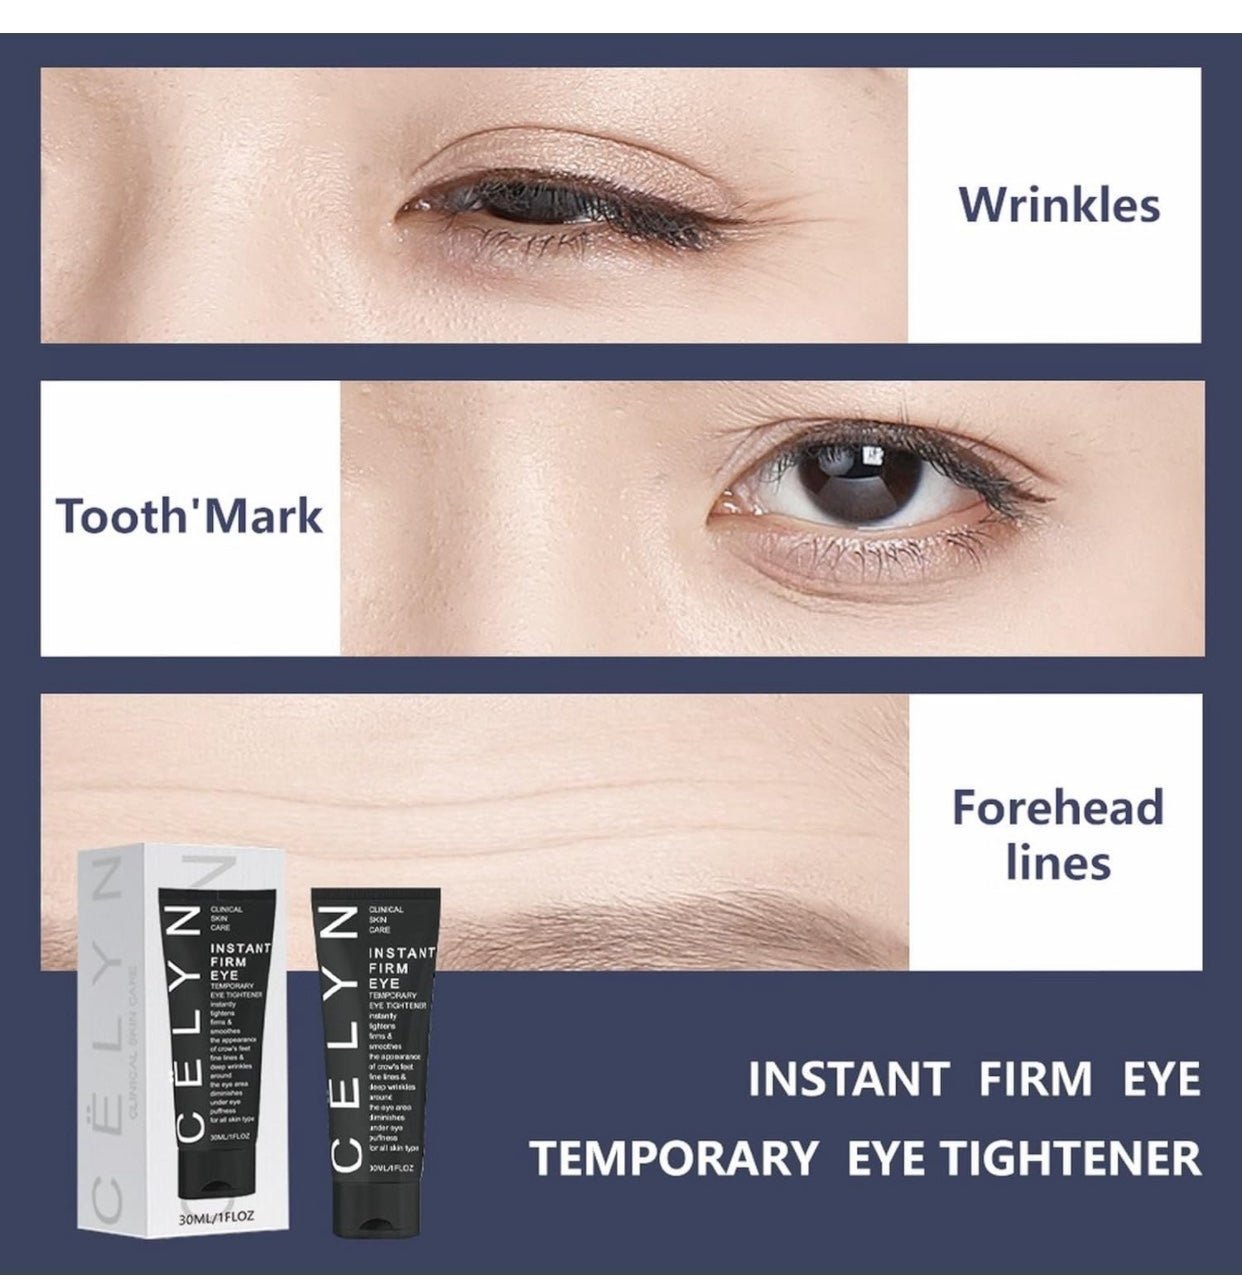 Moisturizing Eye Cream, Instant Firm Eye Cream, Temporary Tightener Eye Cream 2p f2OJ8BW4K